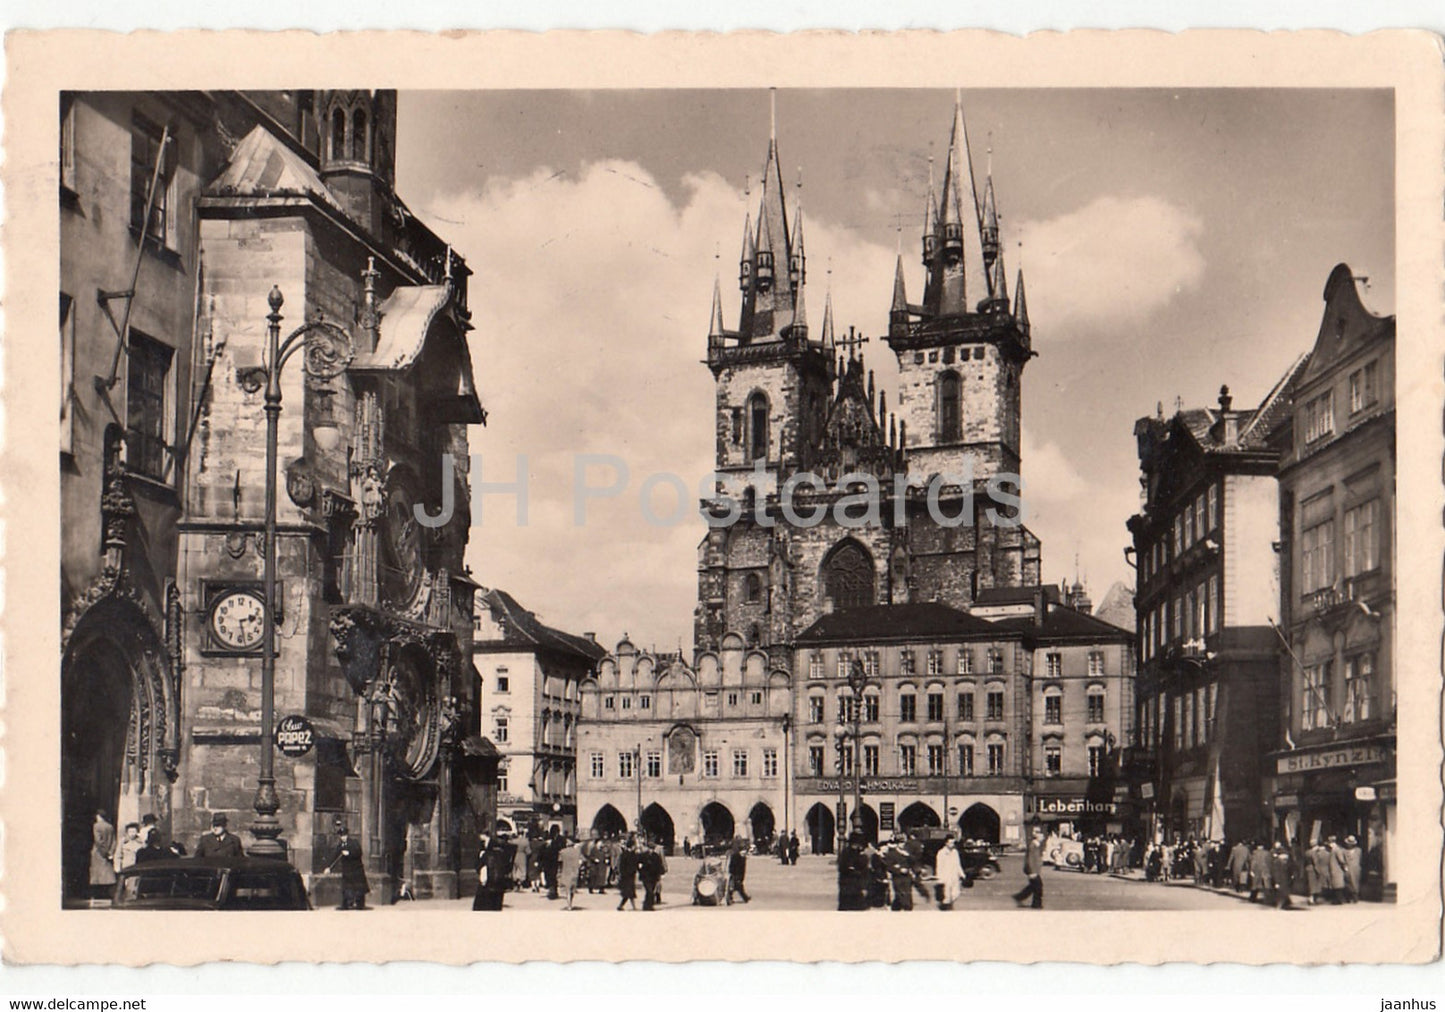 Praha - Prague - Staromestske nam Tynsky chram - 24 - old postcard - Czech Republic - used - JH Postcards